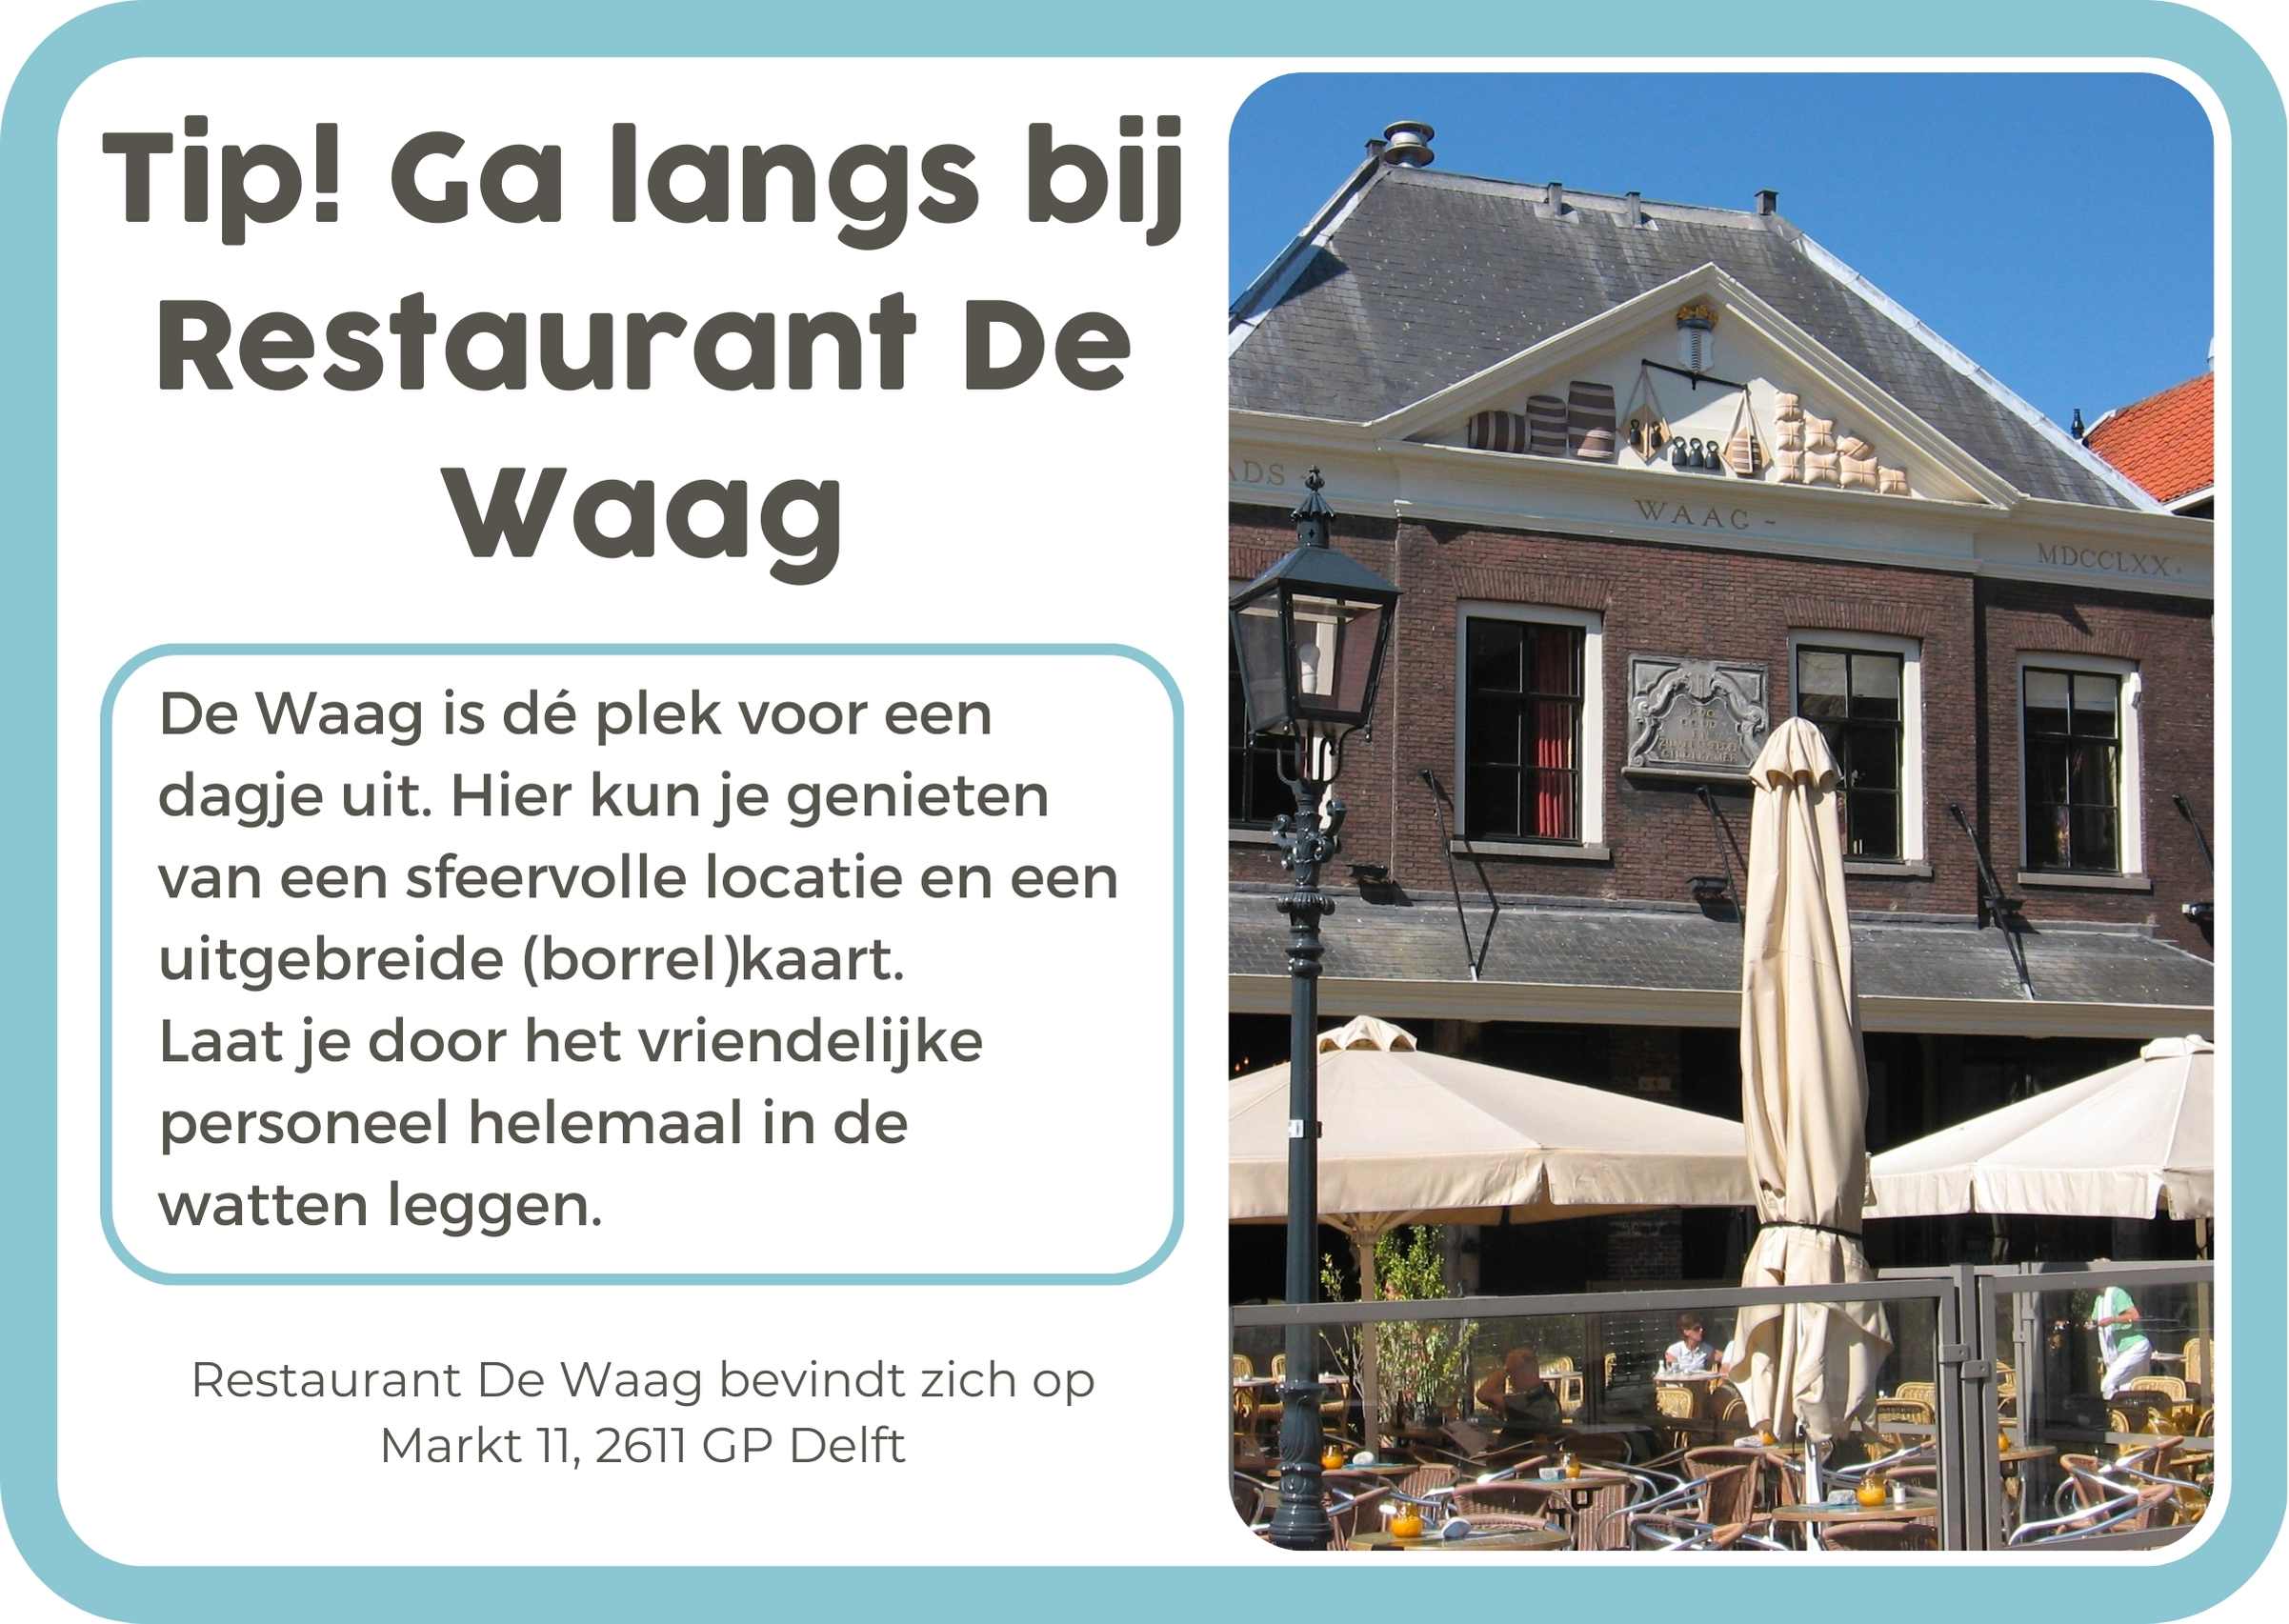 2. NL Restaurant de Waag